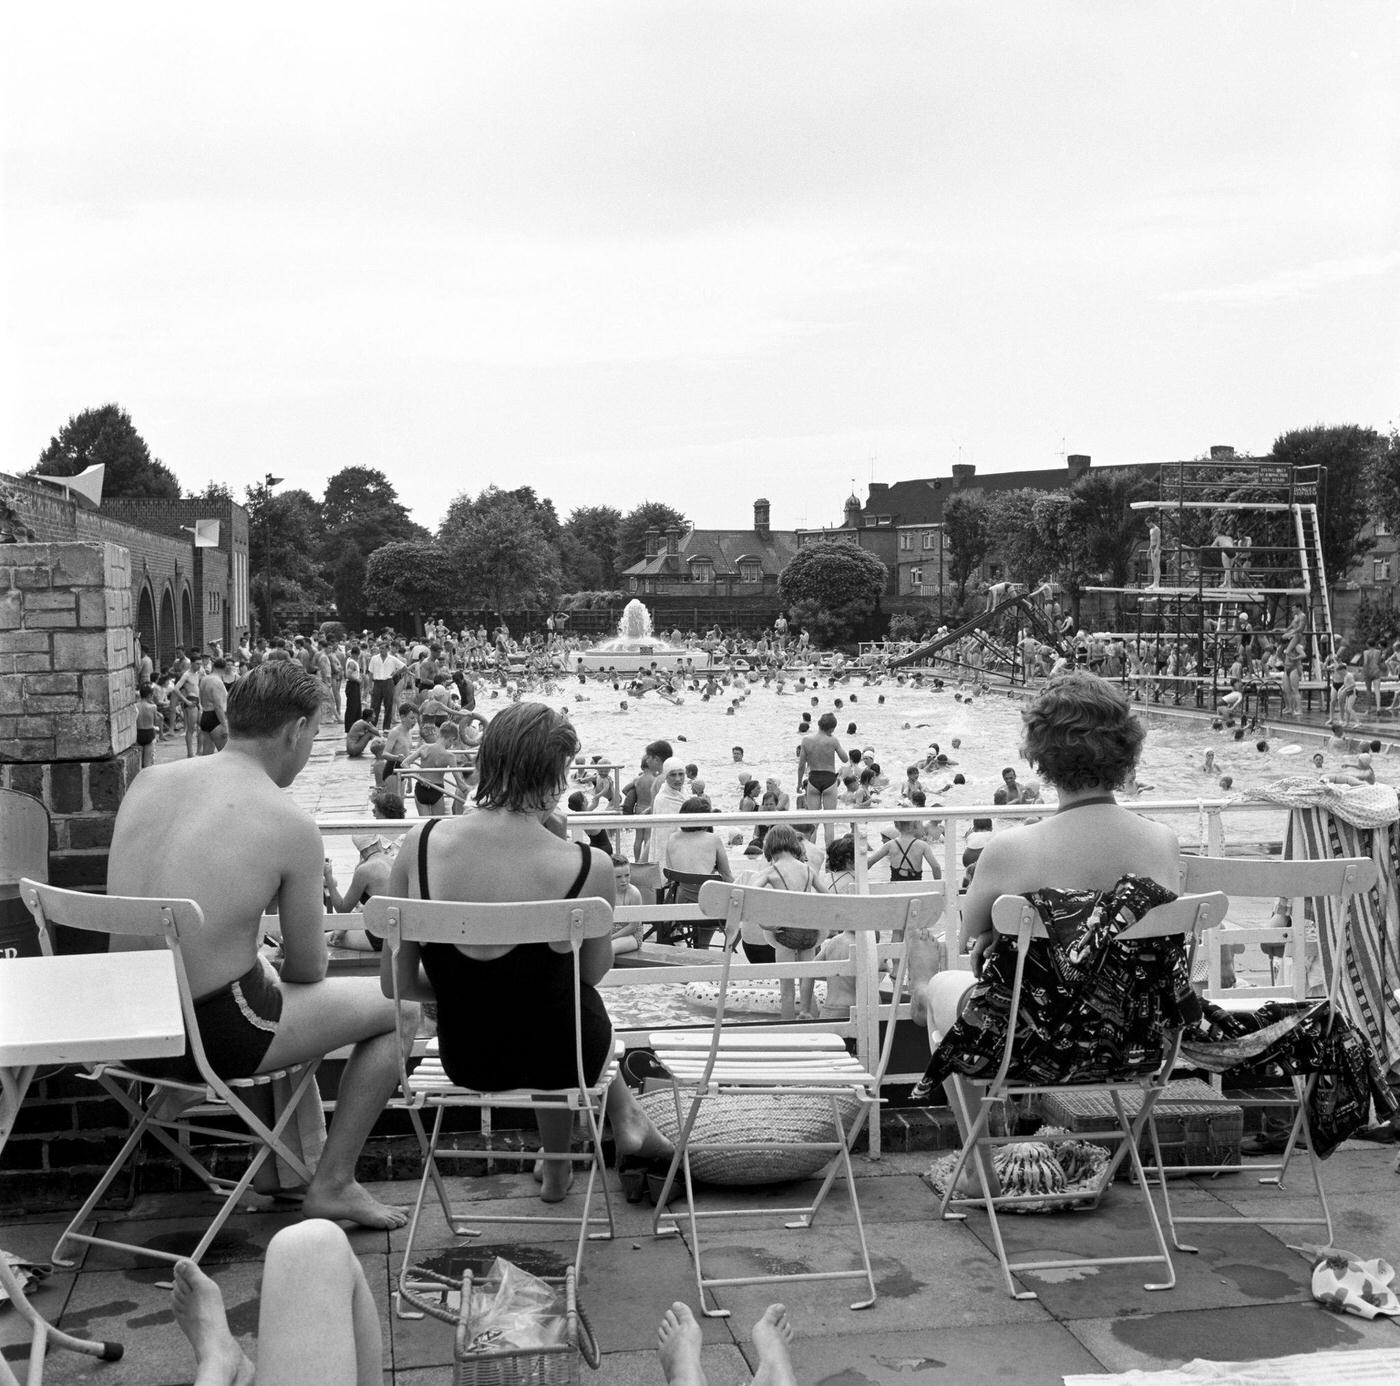 Crowds of sunbathers at the Twickenham outdoor swimming pool, 1960